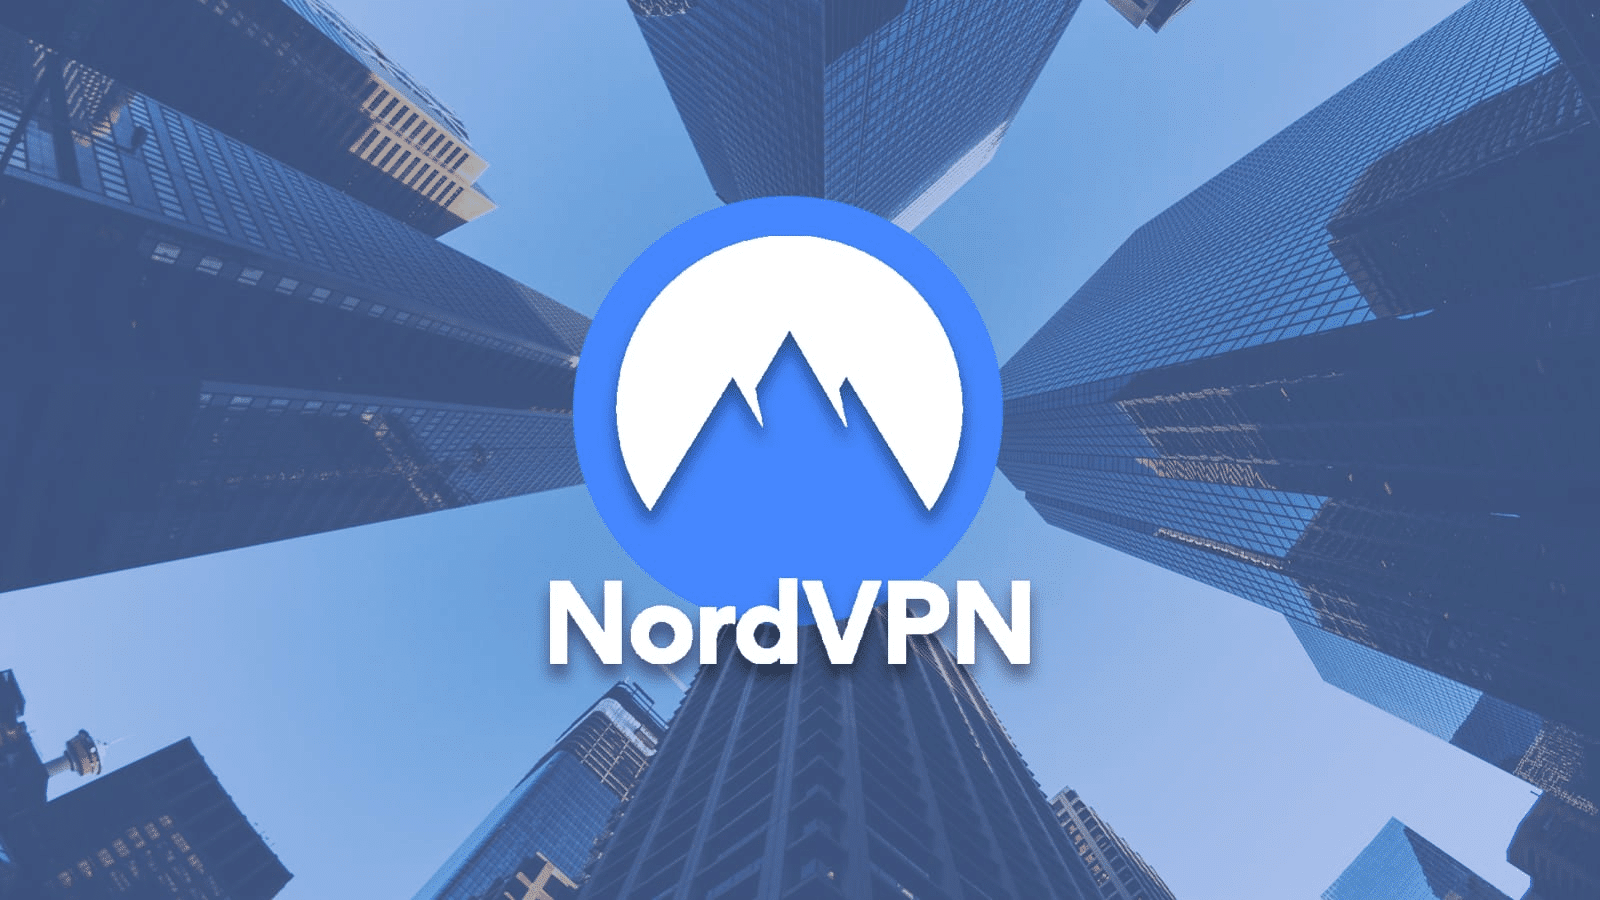 NordVPN Logo Skyscrapers Background min